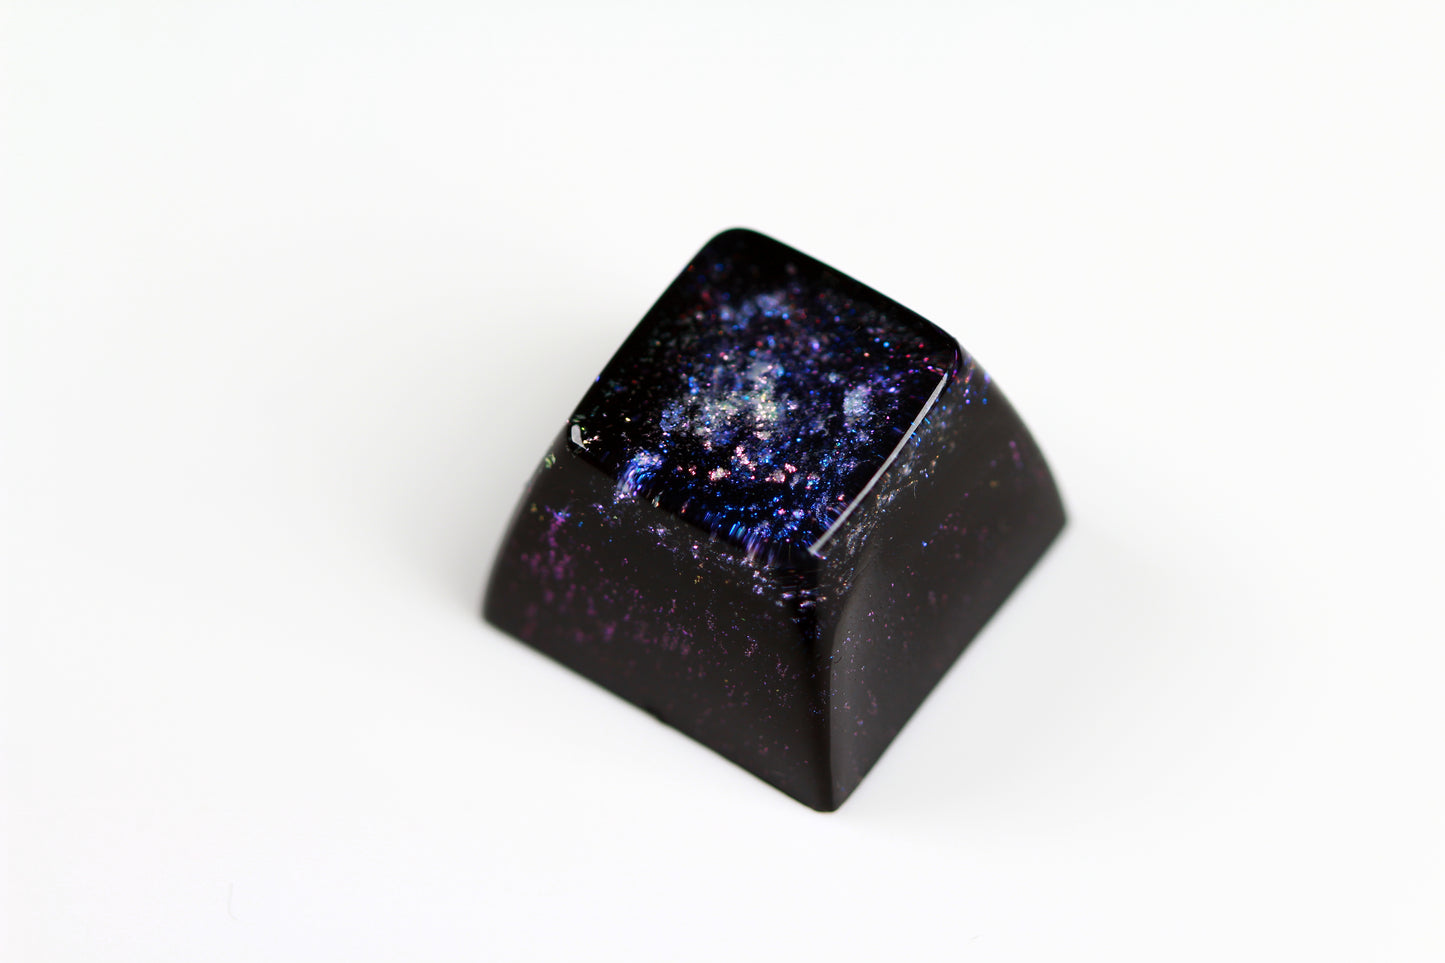 Gimpy SA Row 2/4 - Deep Field Opal Nebula 1 - PrimeCaps Keycap - Blank and Sculpted Artisan Keycaps for cherry MX mechanical keyboards 